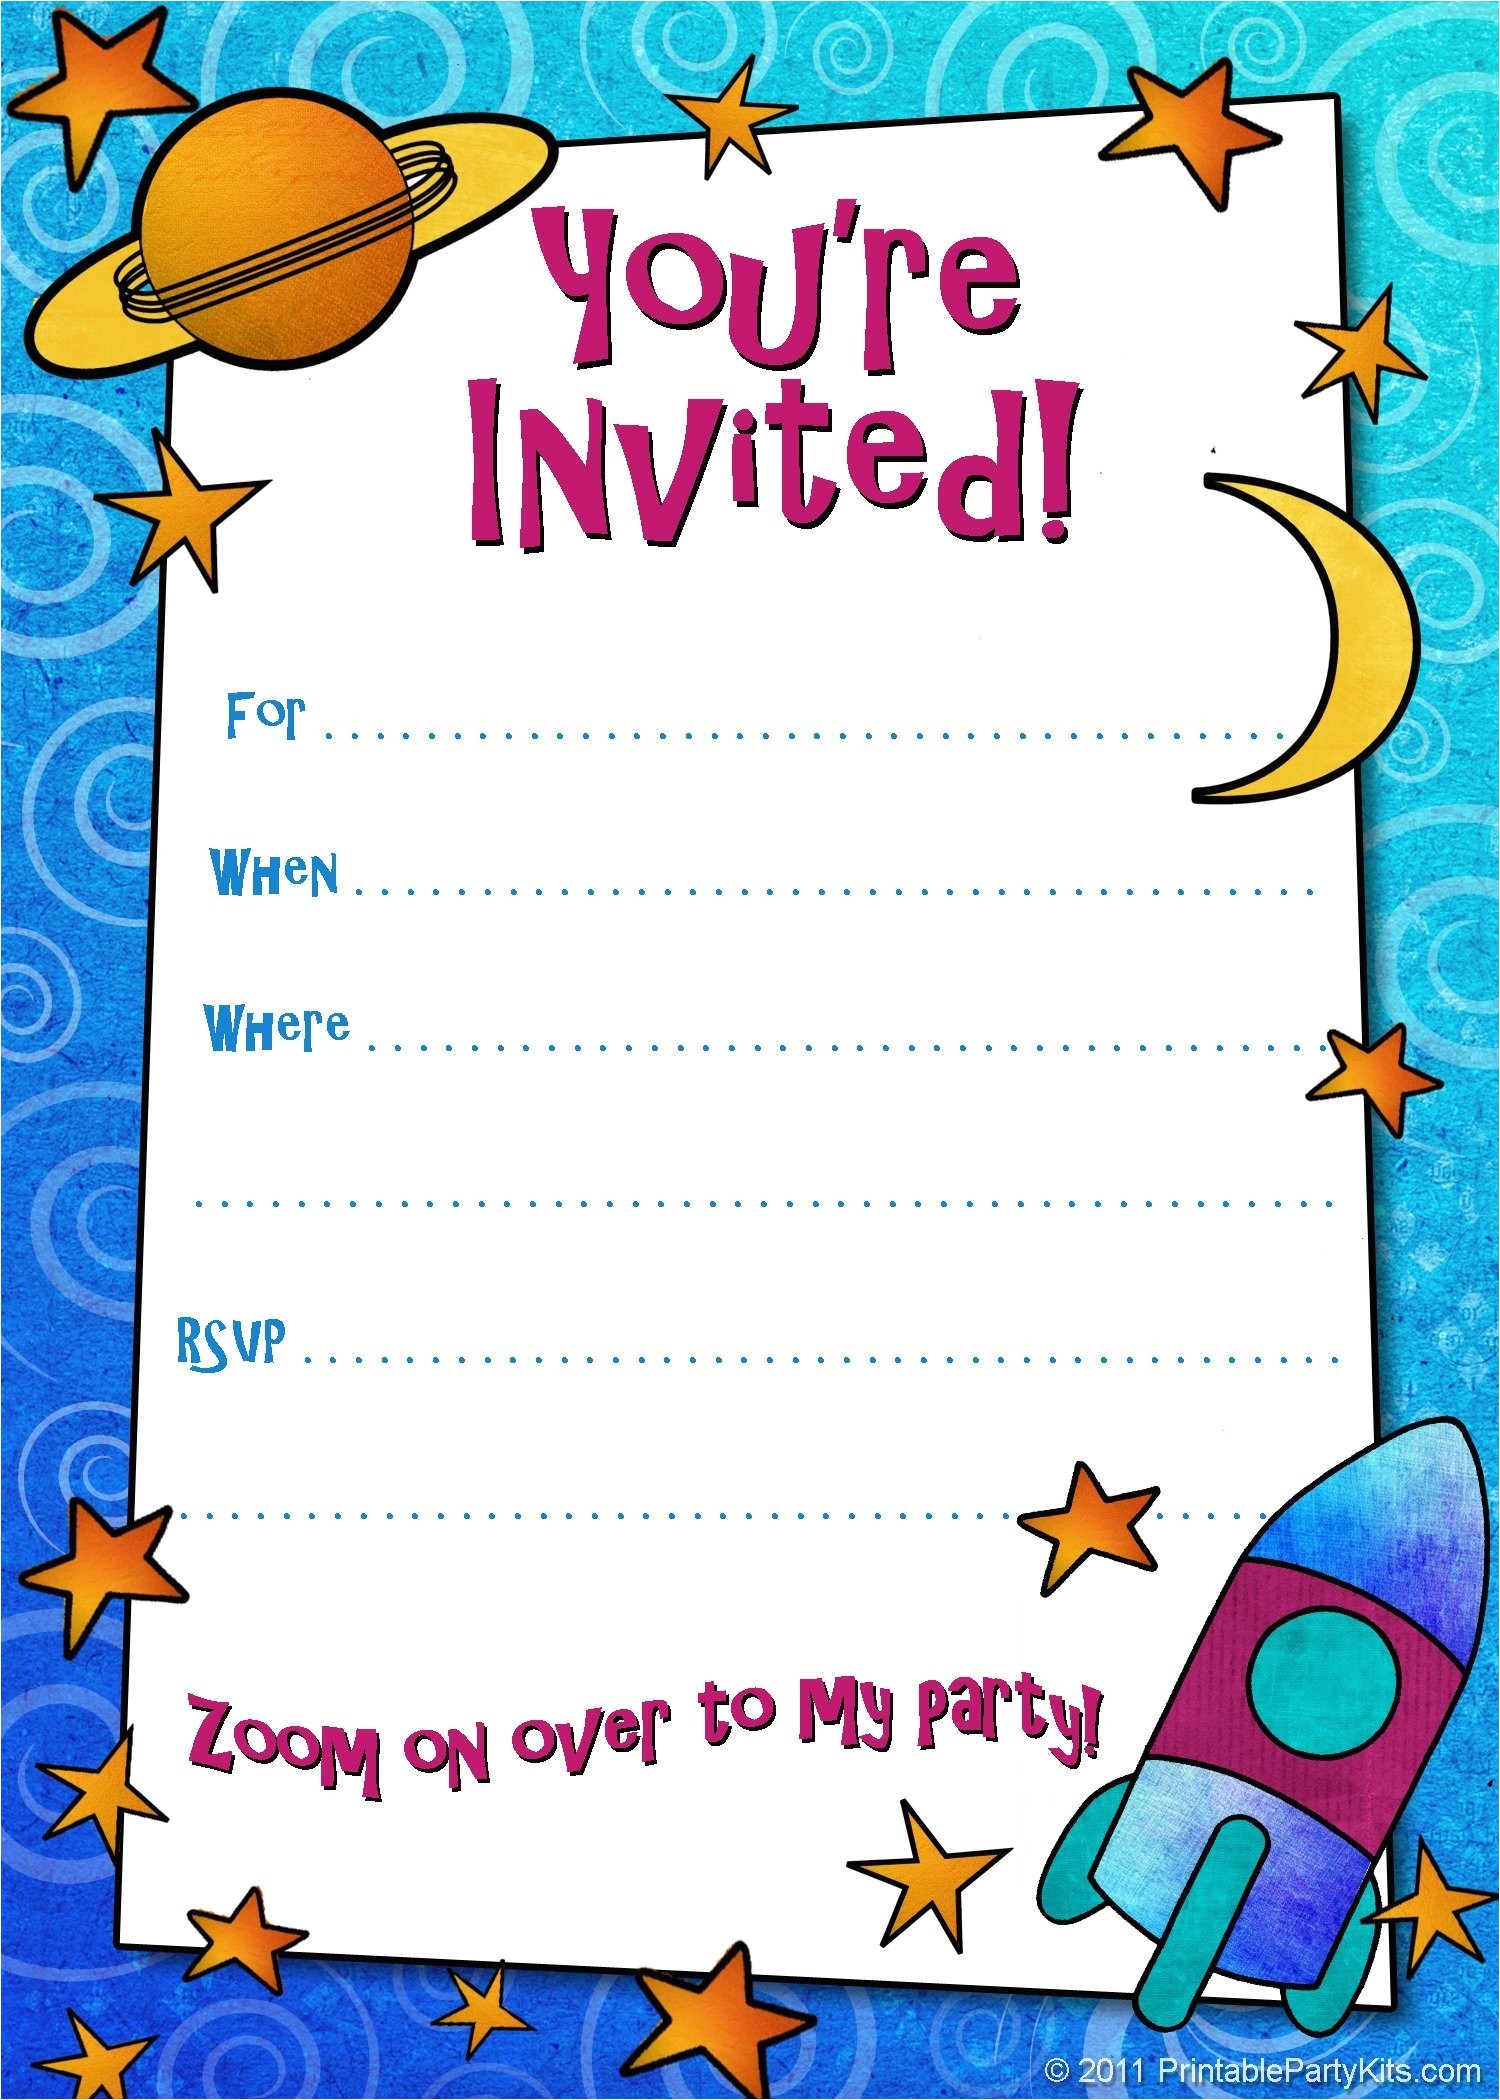 7th birthday invitation card design blank for boys